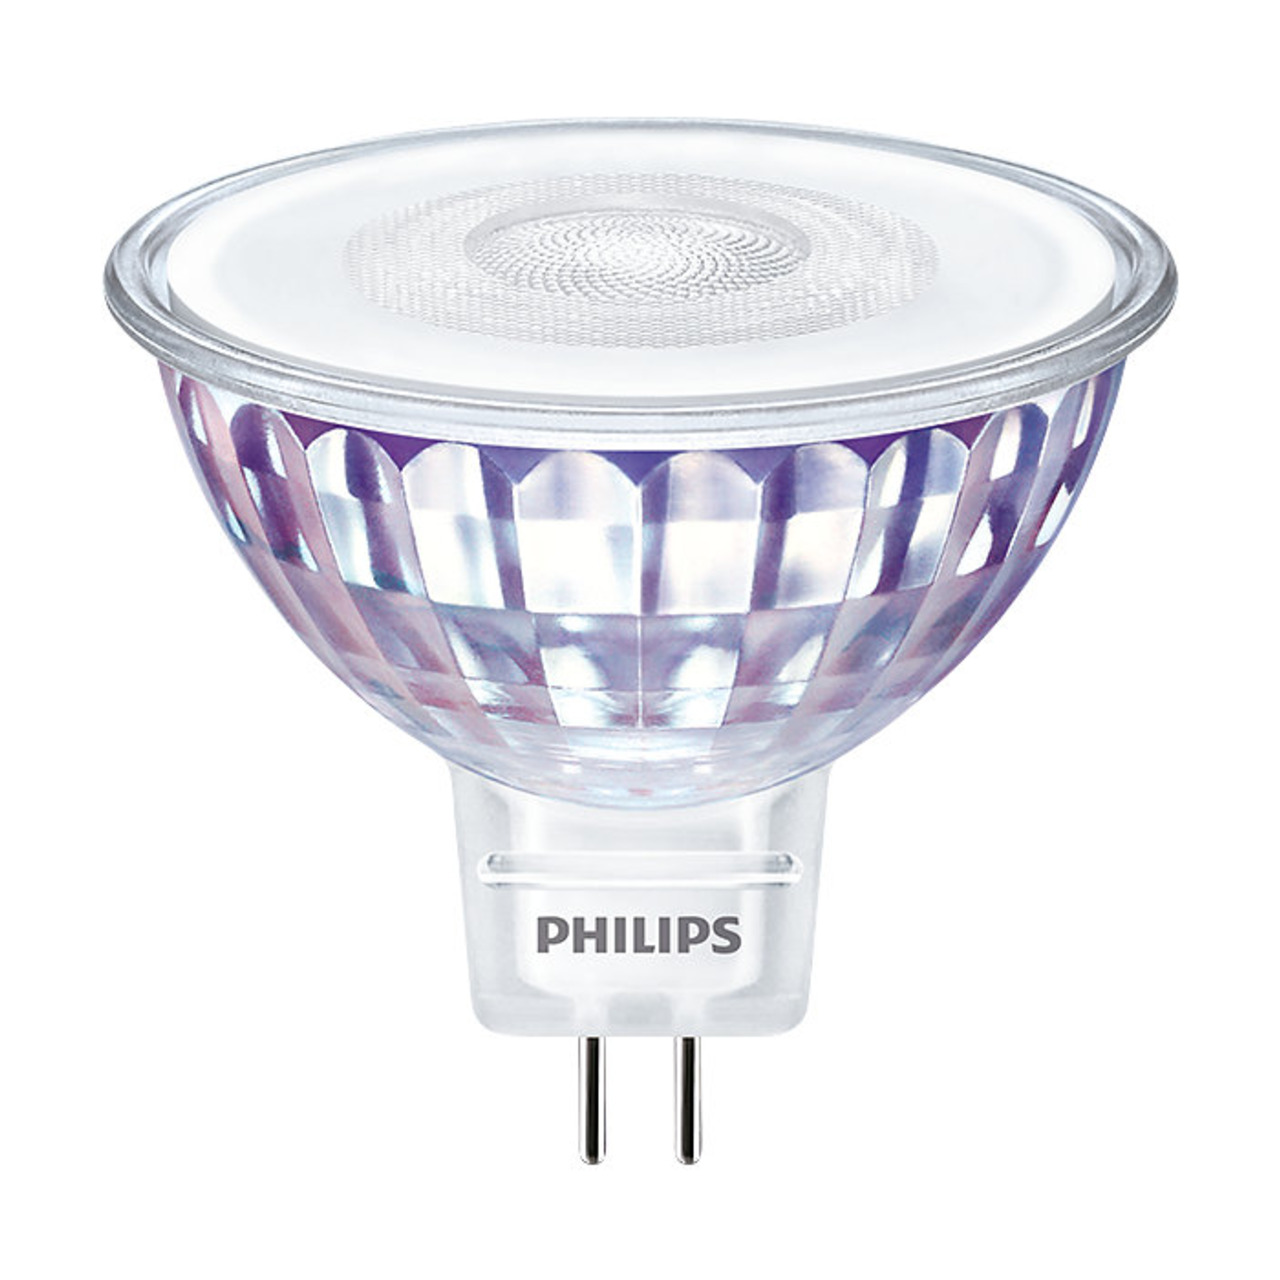 Philips 7-5-W-GU5-3-LED-Lampe Master LEDspot Value- MR16- 621 lm- warmweiss (2700 K)- 60- dimmbar unter Beleuchtung